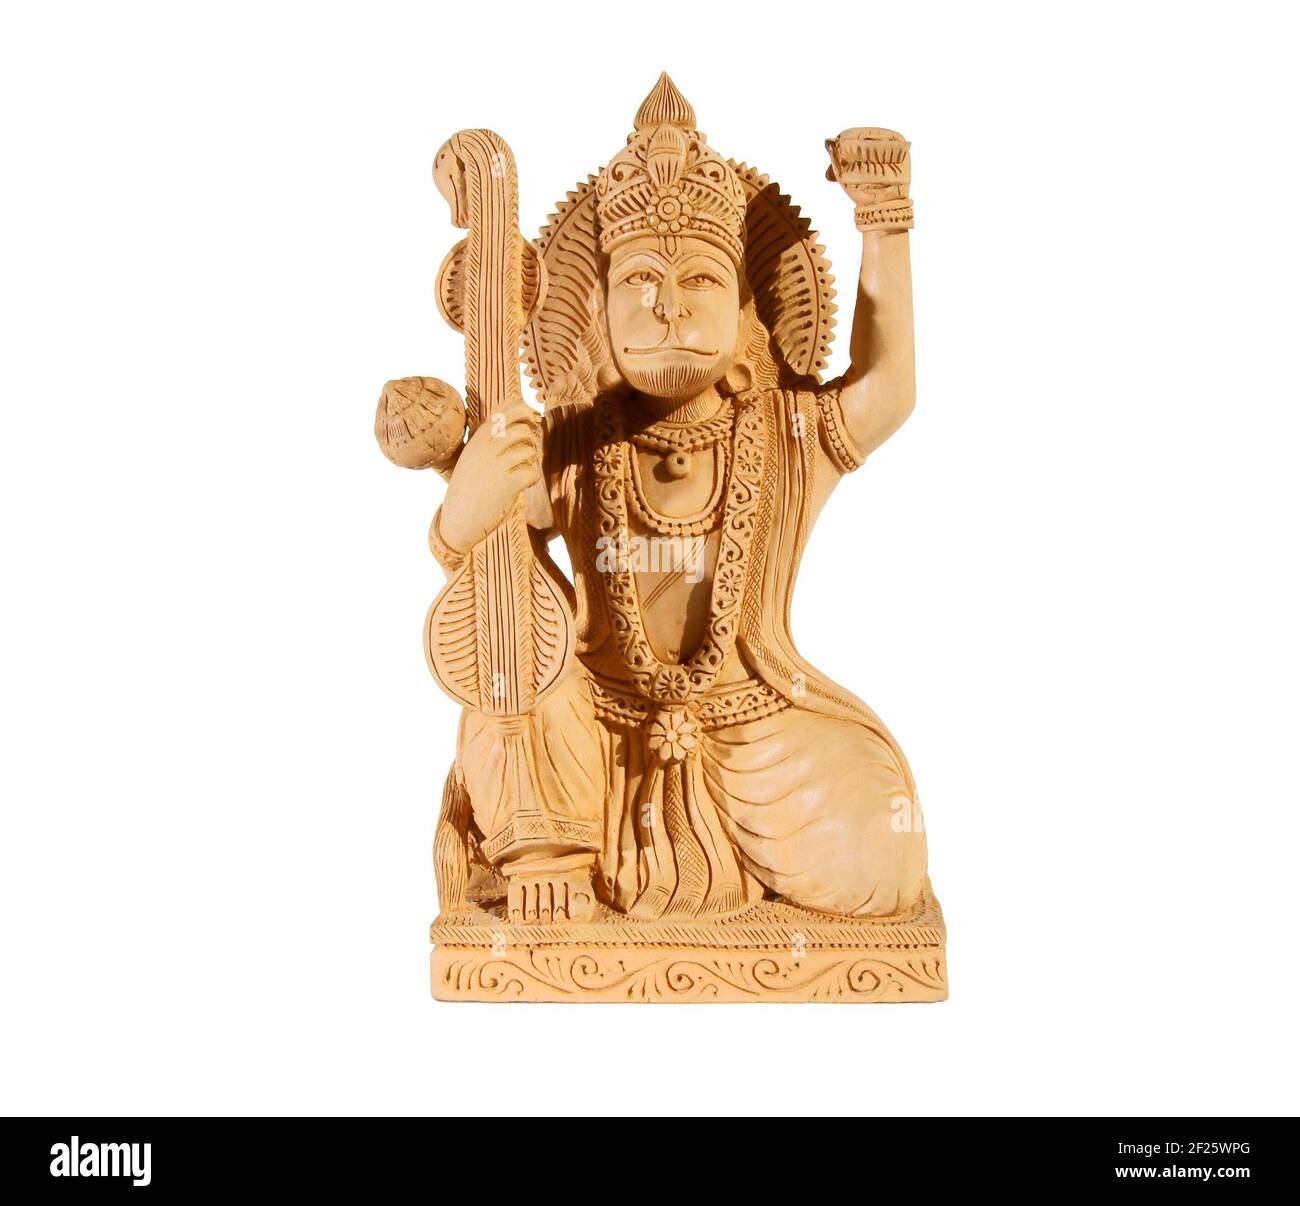 Deity of Hanuman from India on white background Stock Photo - Alamy